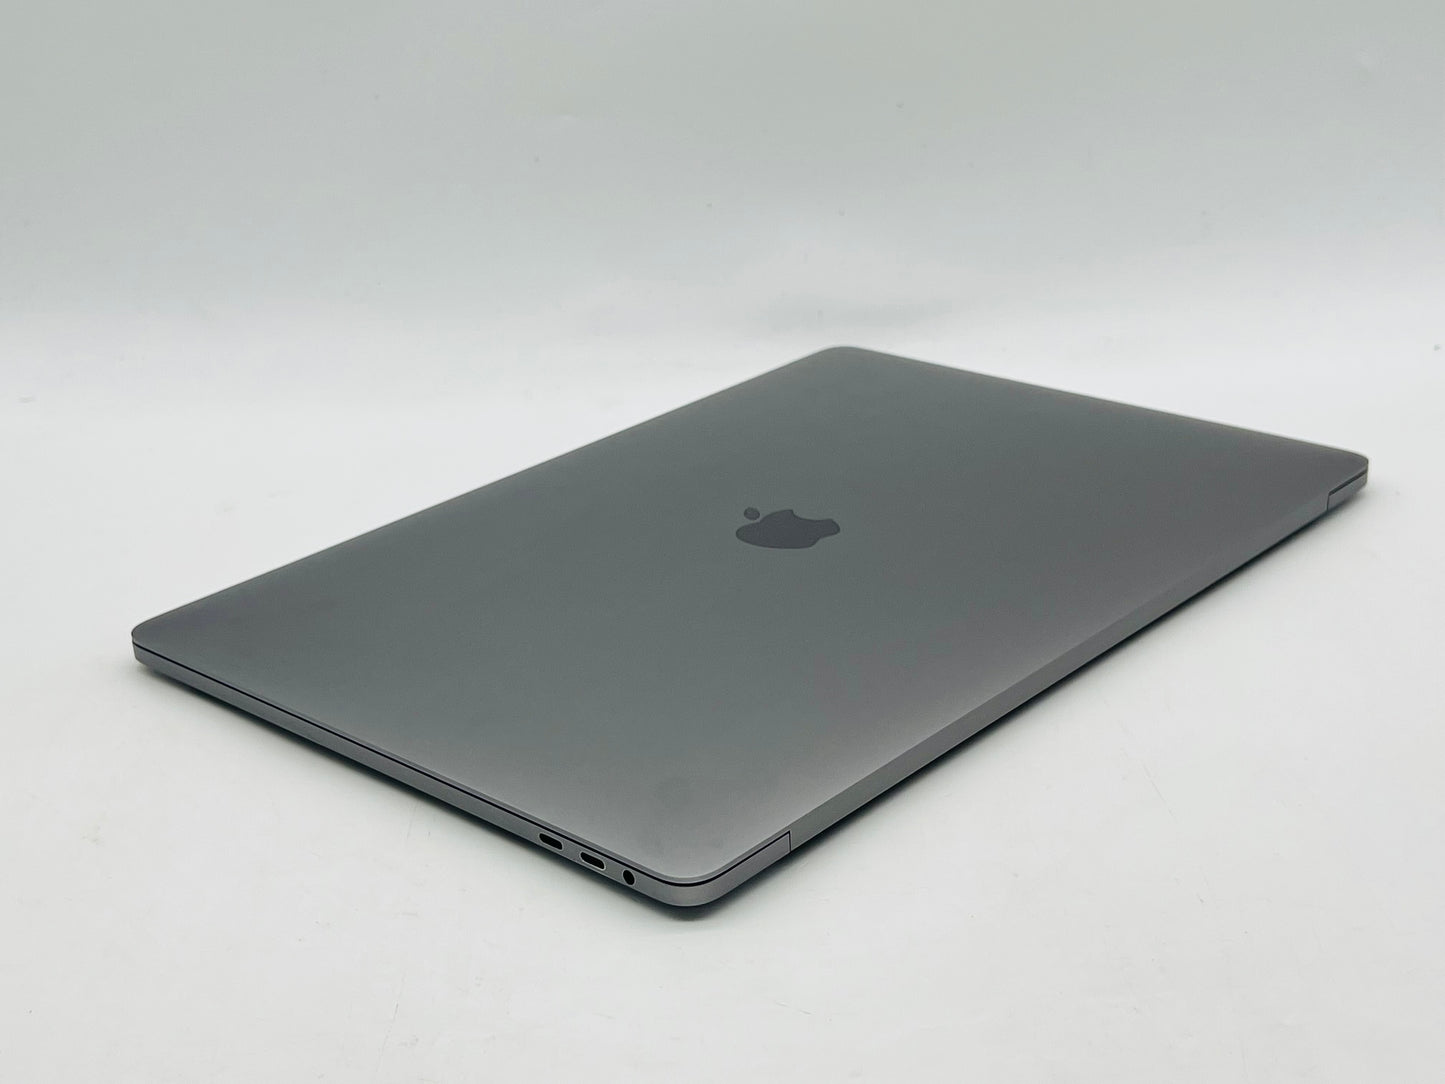 Apple 2019 MacBook Pro 15 in TB 2.6GHz 6-Core i7 16GB RAM 256GB SSD RP555X 4GB